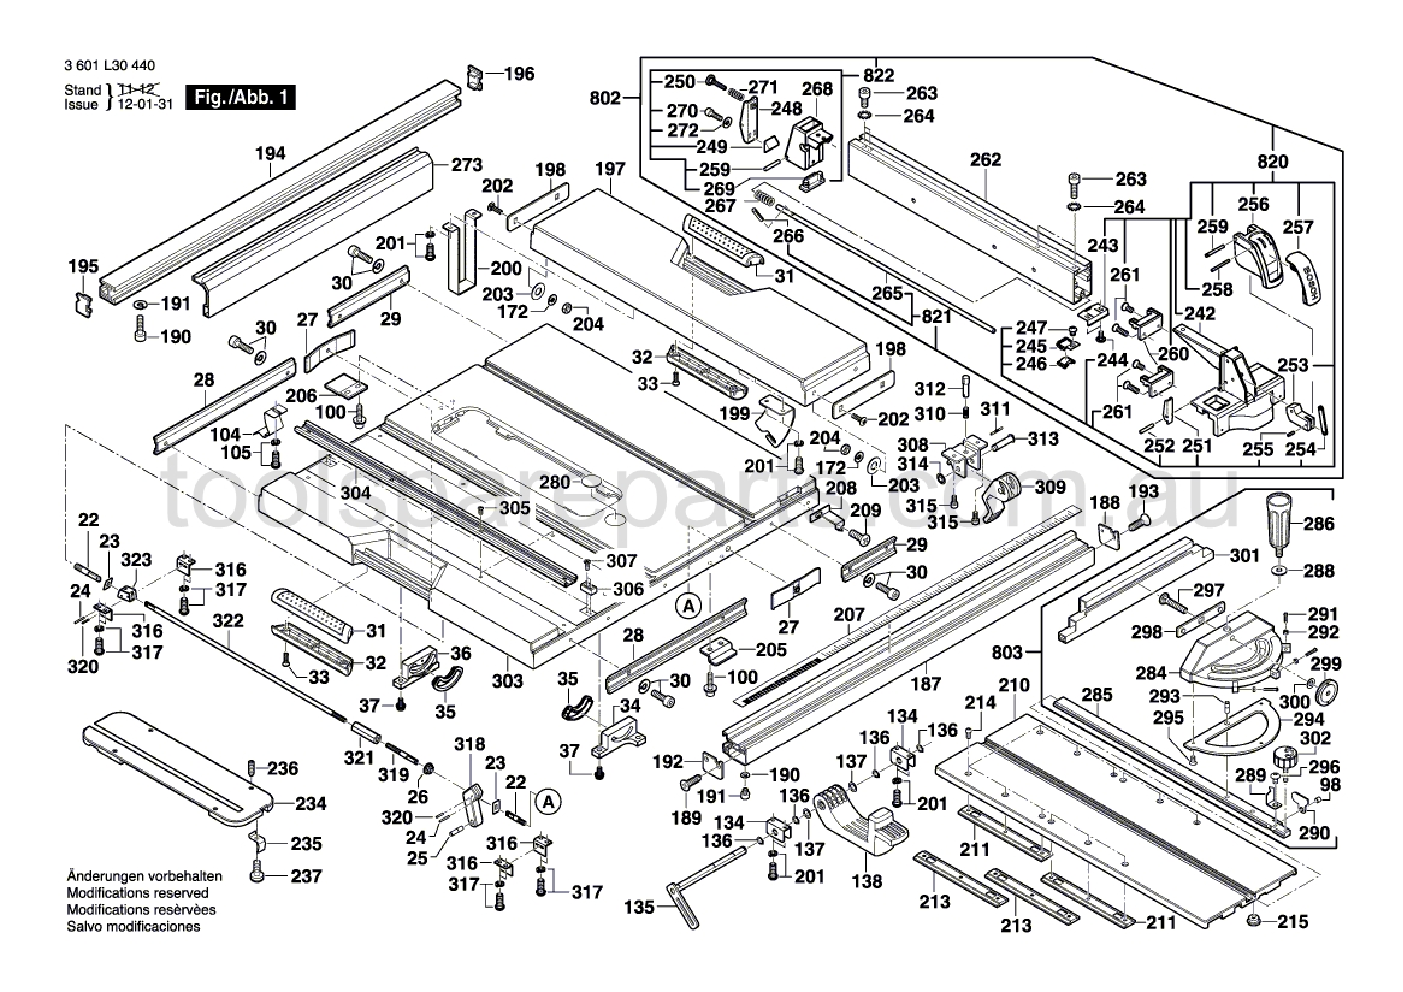 Bosch GTS 10 XC 3601L30440  Diagram 1